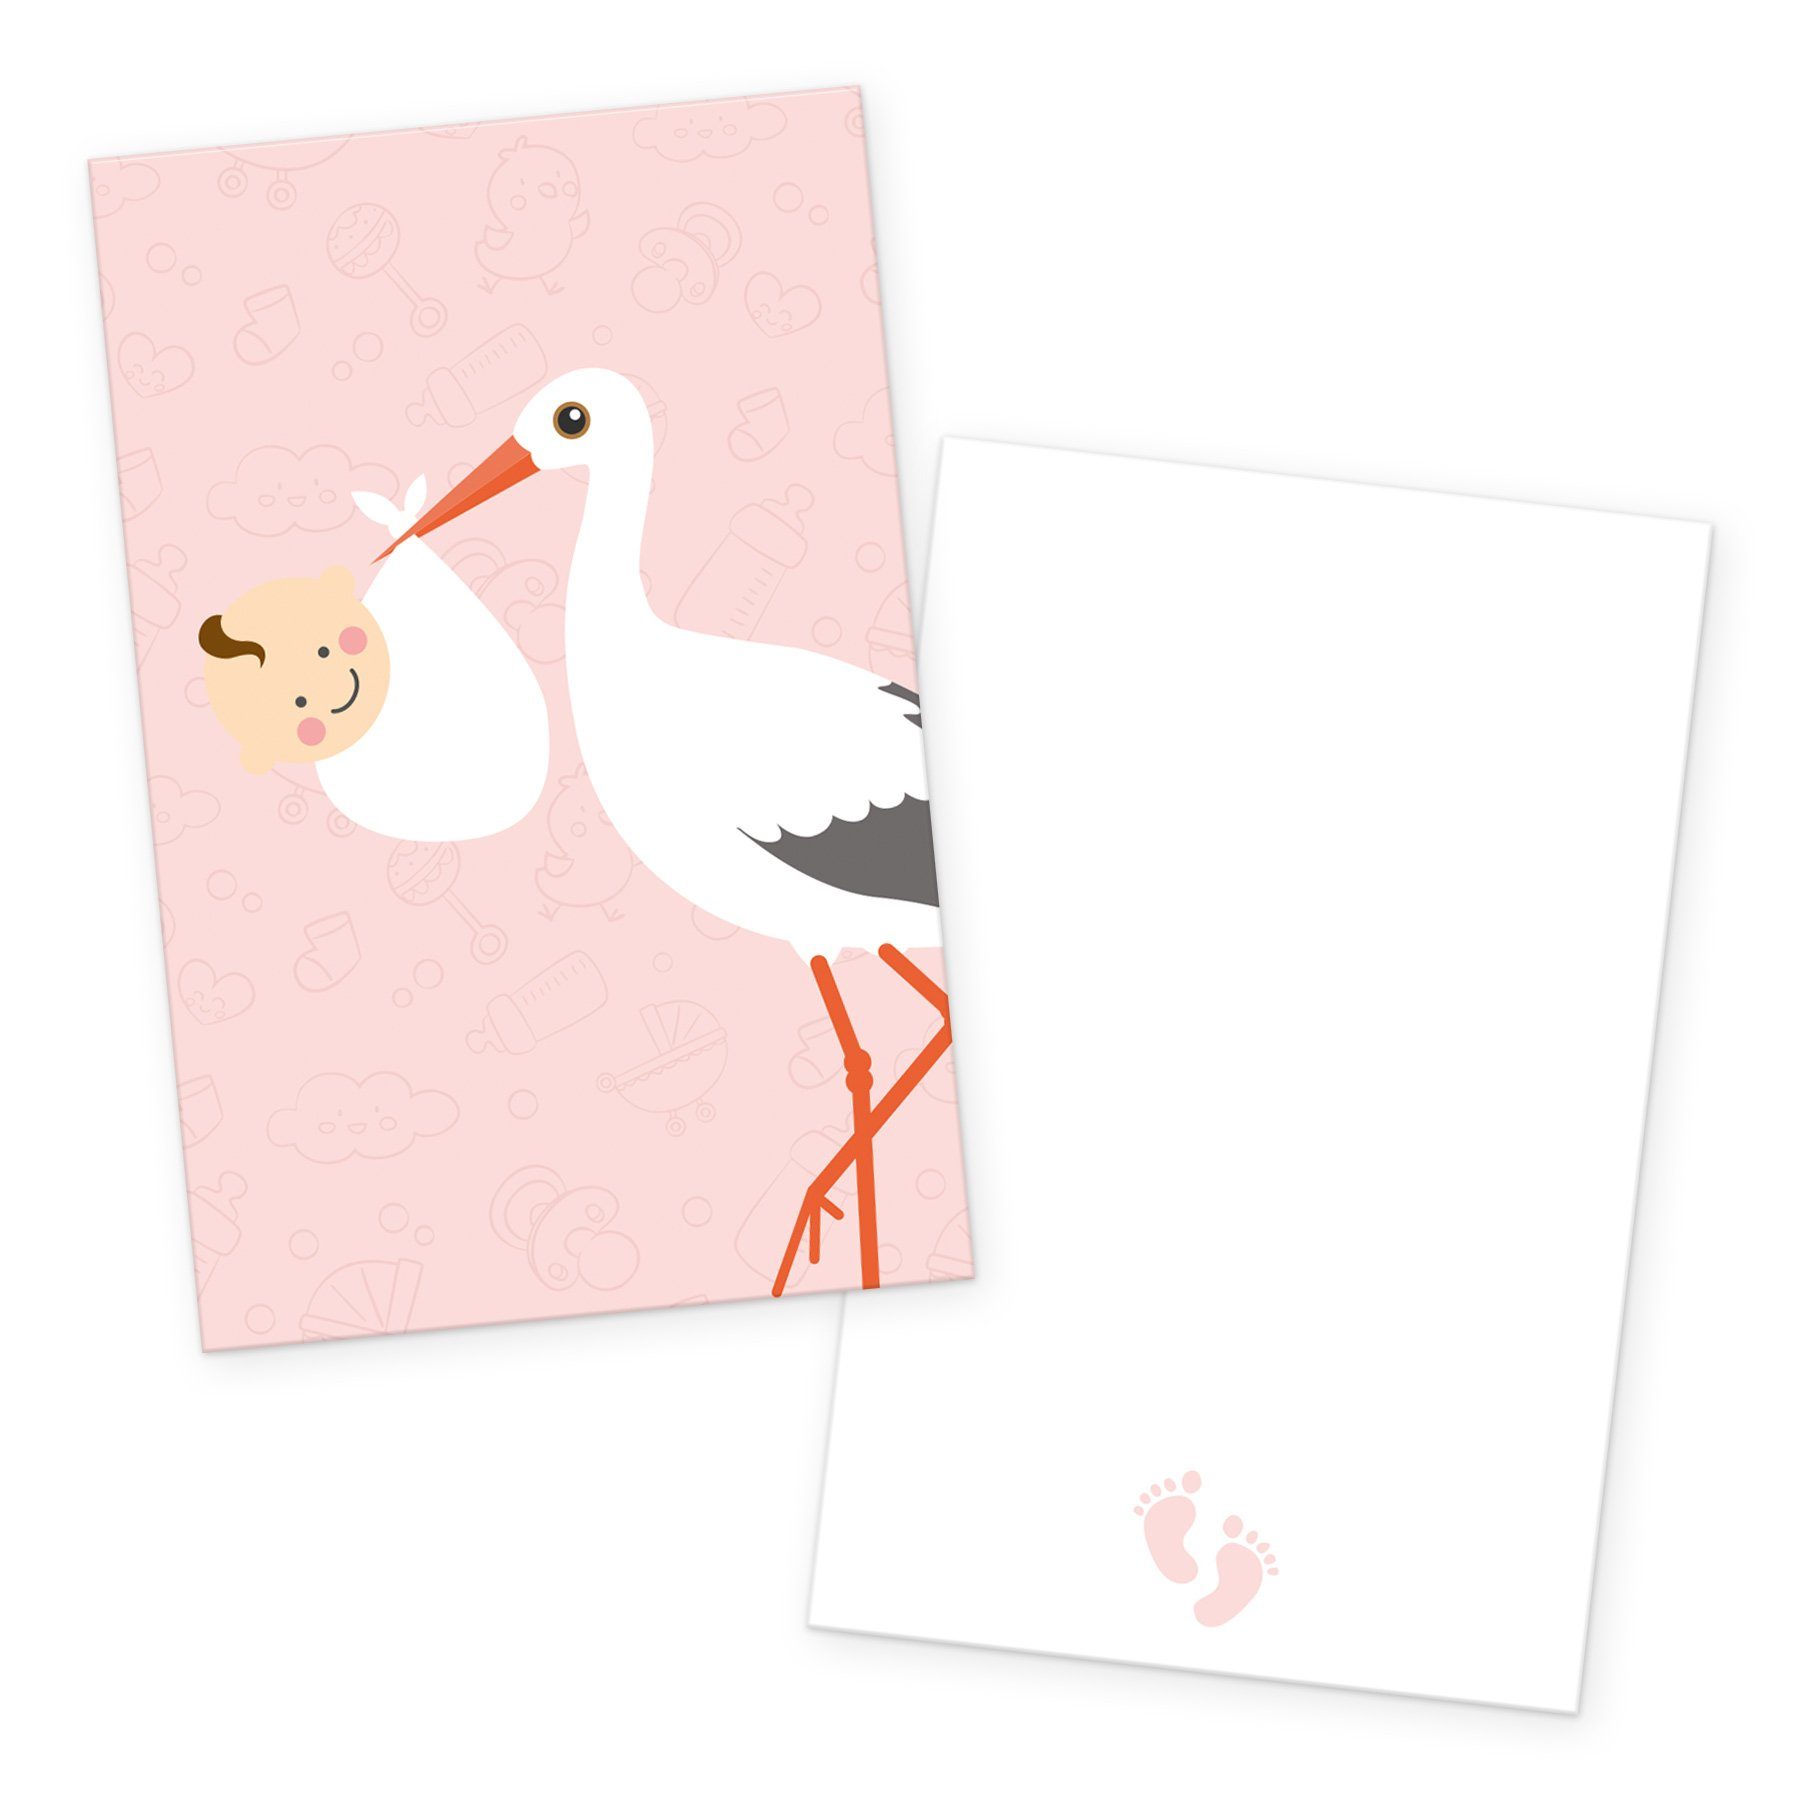 itenga Grußkarten itenga 24x Kärtchen "Storch mit Baby" rosa pastell in Visitenkartengrö